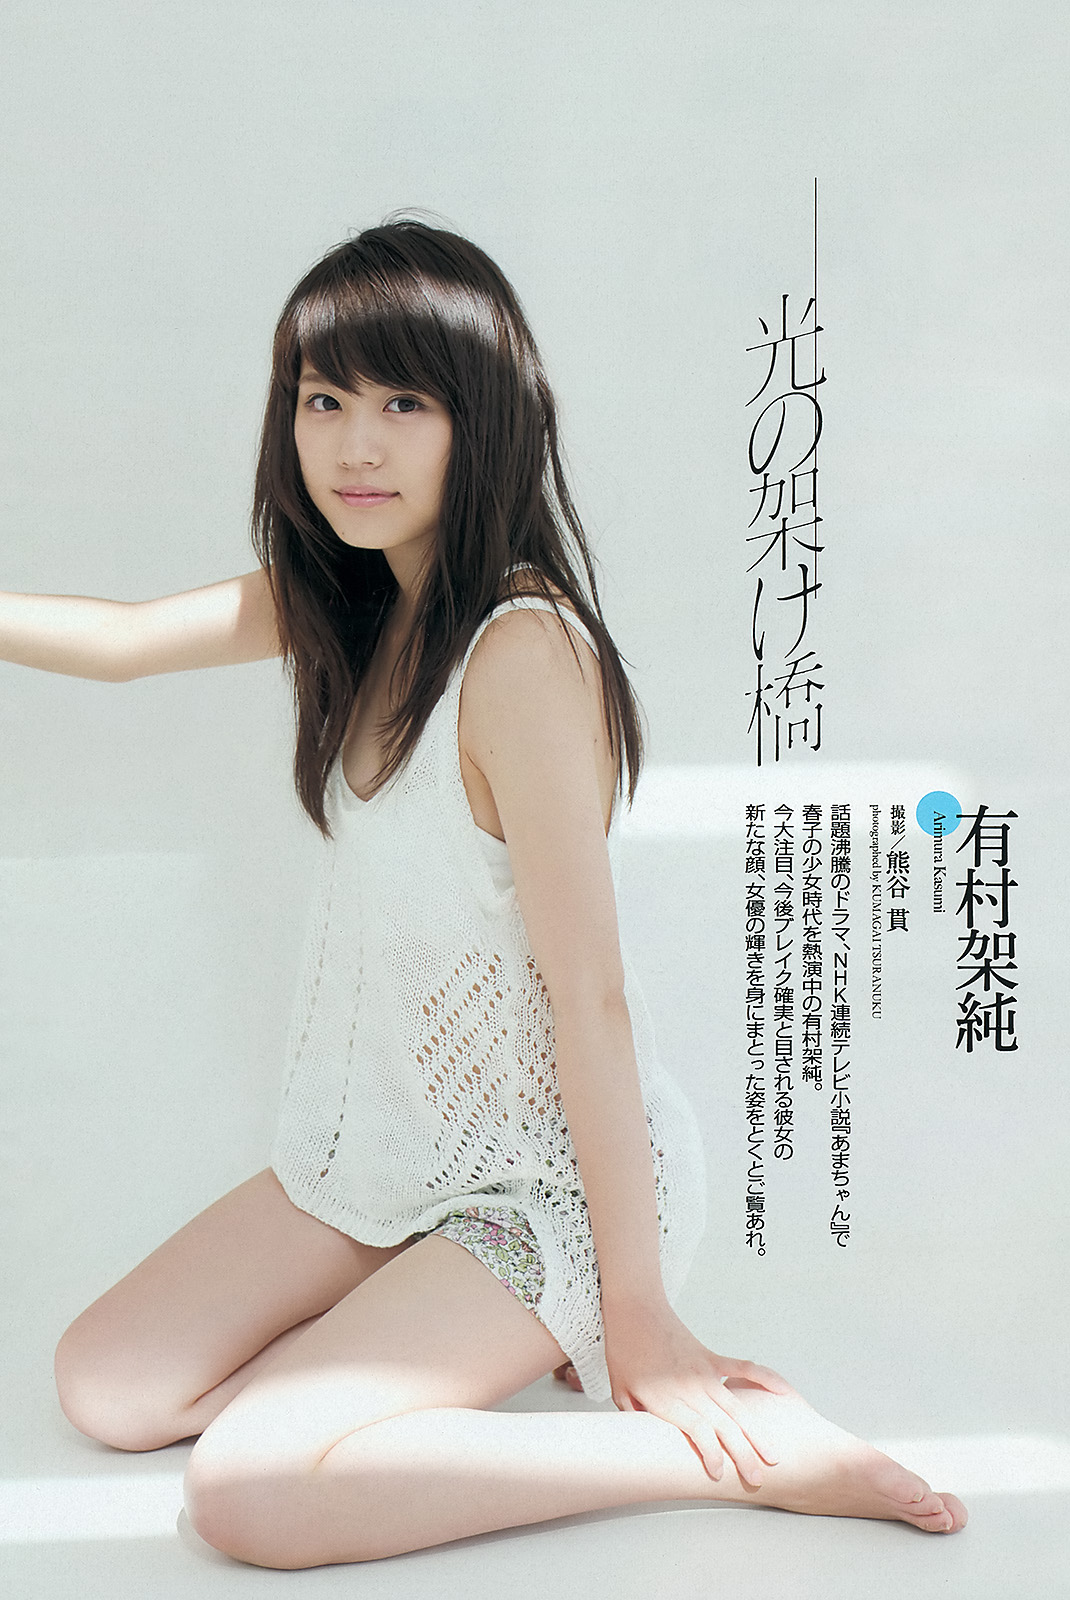 Nao Kanzaki and a few friends: Kasumi Arimura: 2013 magazine scans #1